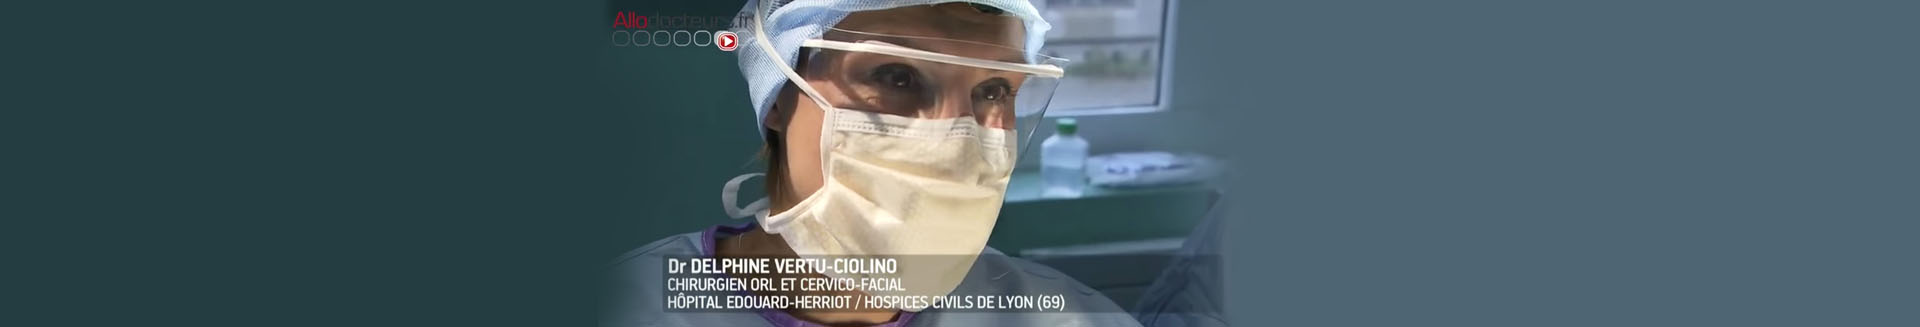 Dr Delphine Vertu Ciolino – Chirurgie ORL et visage